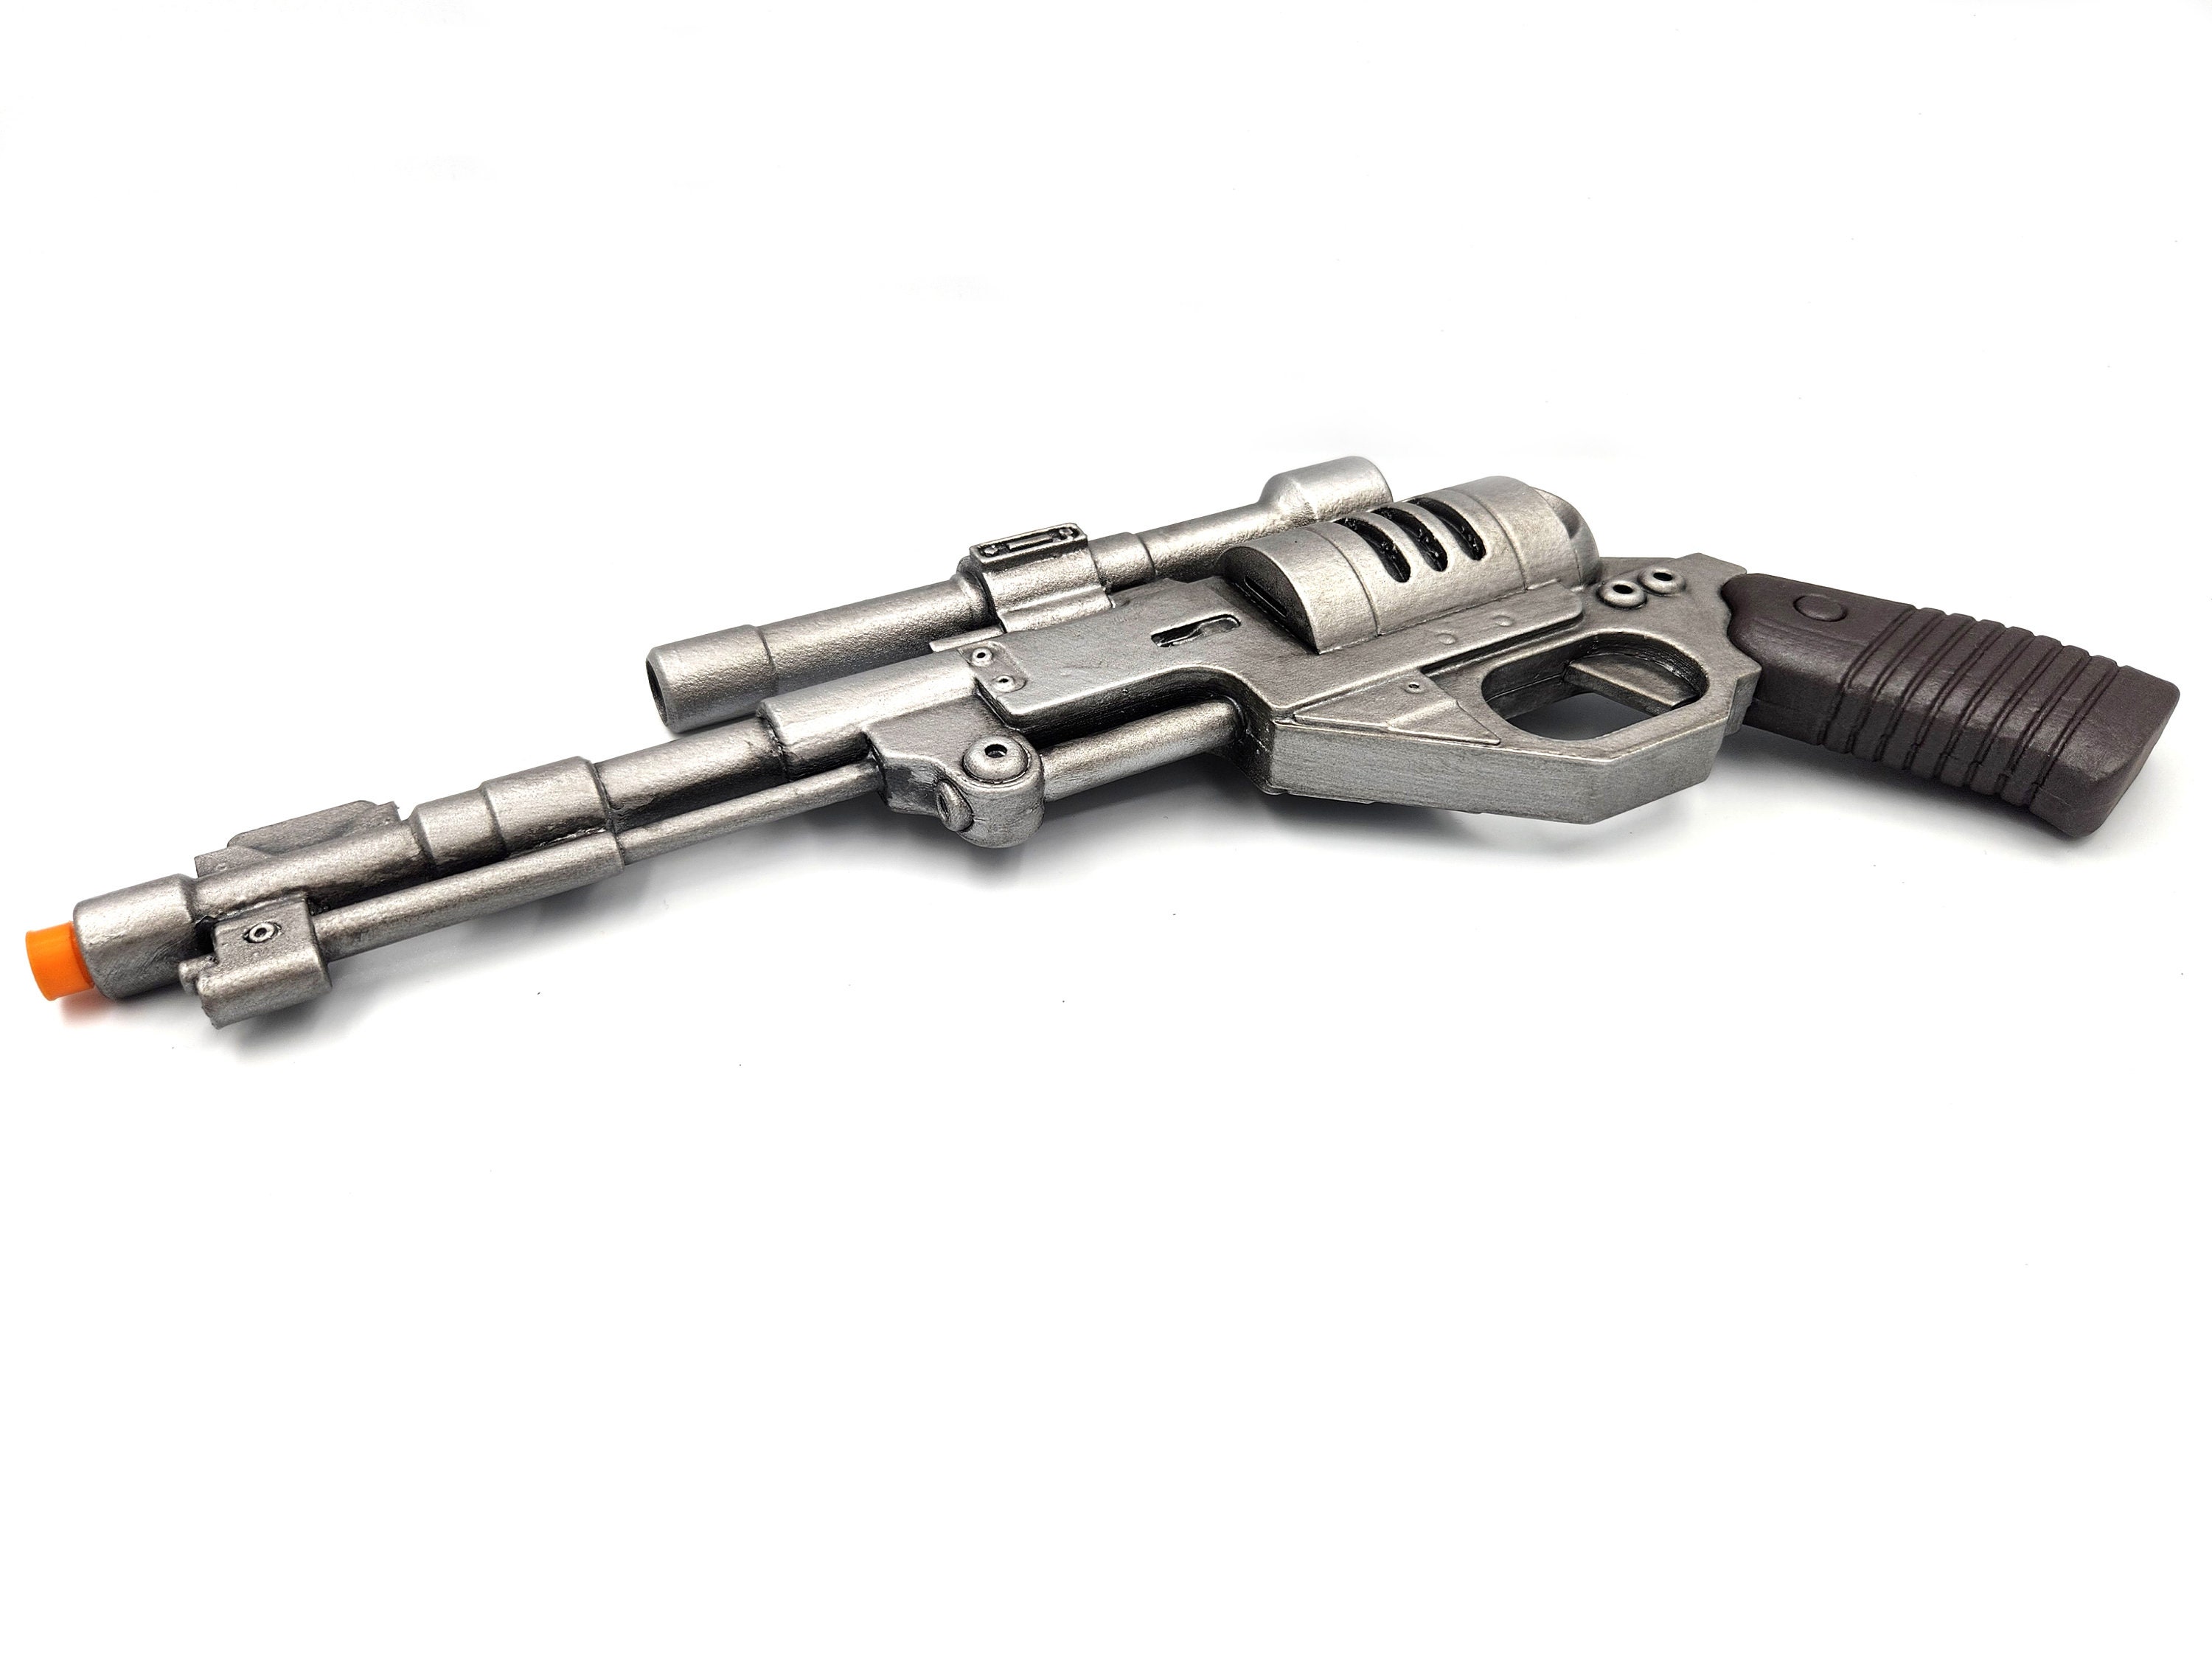 DE-10 blaster pistol| Star Wars Cosplay Prop - Crealandia